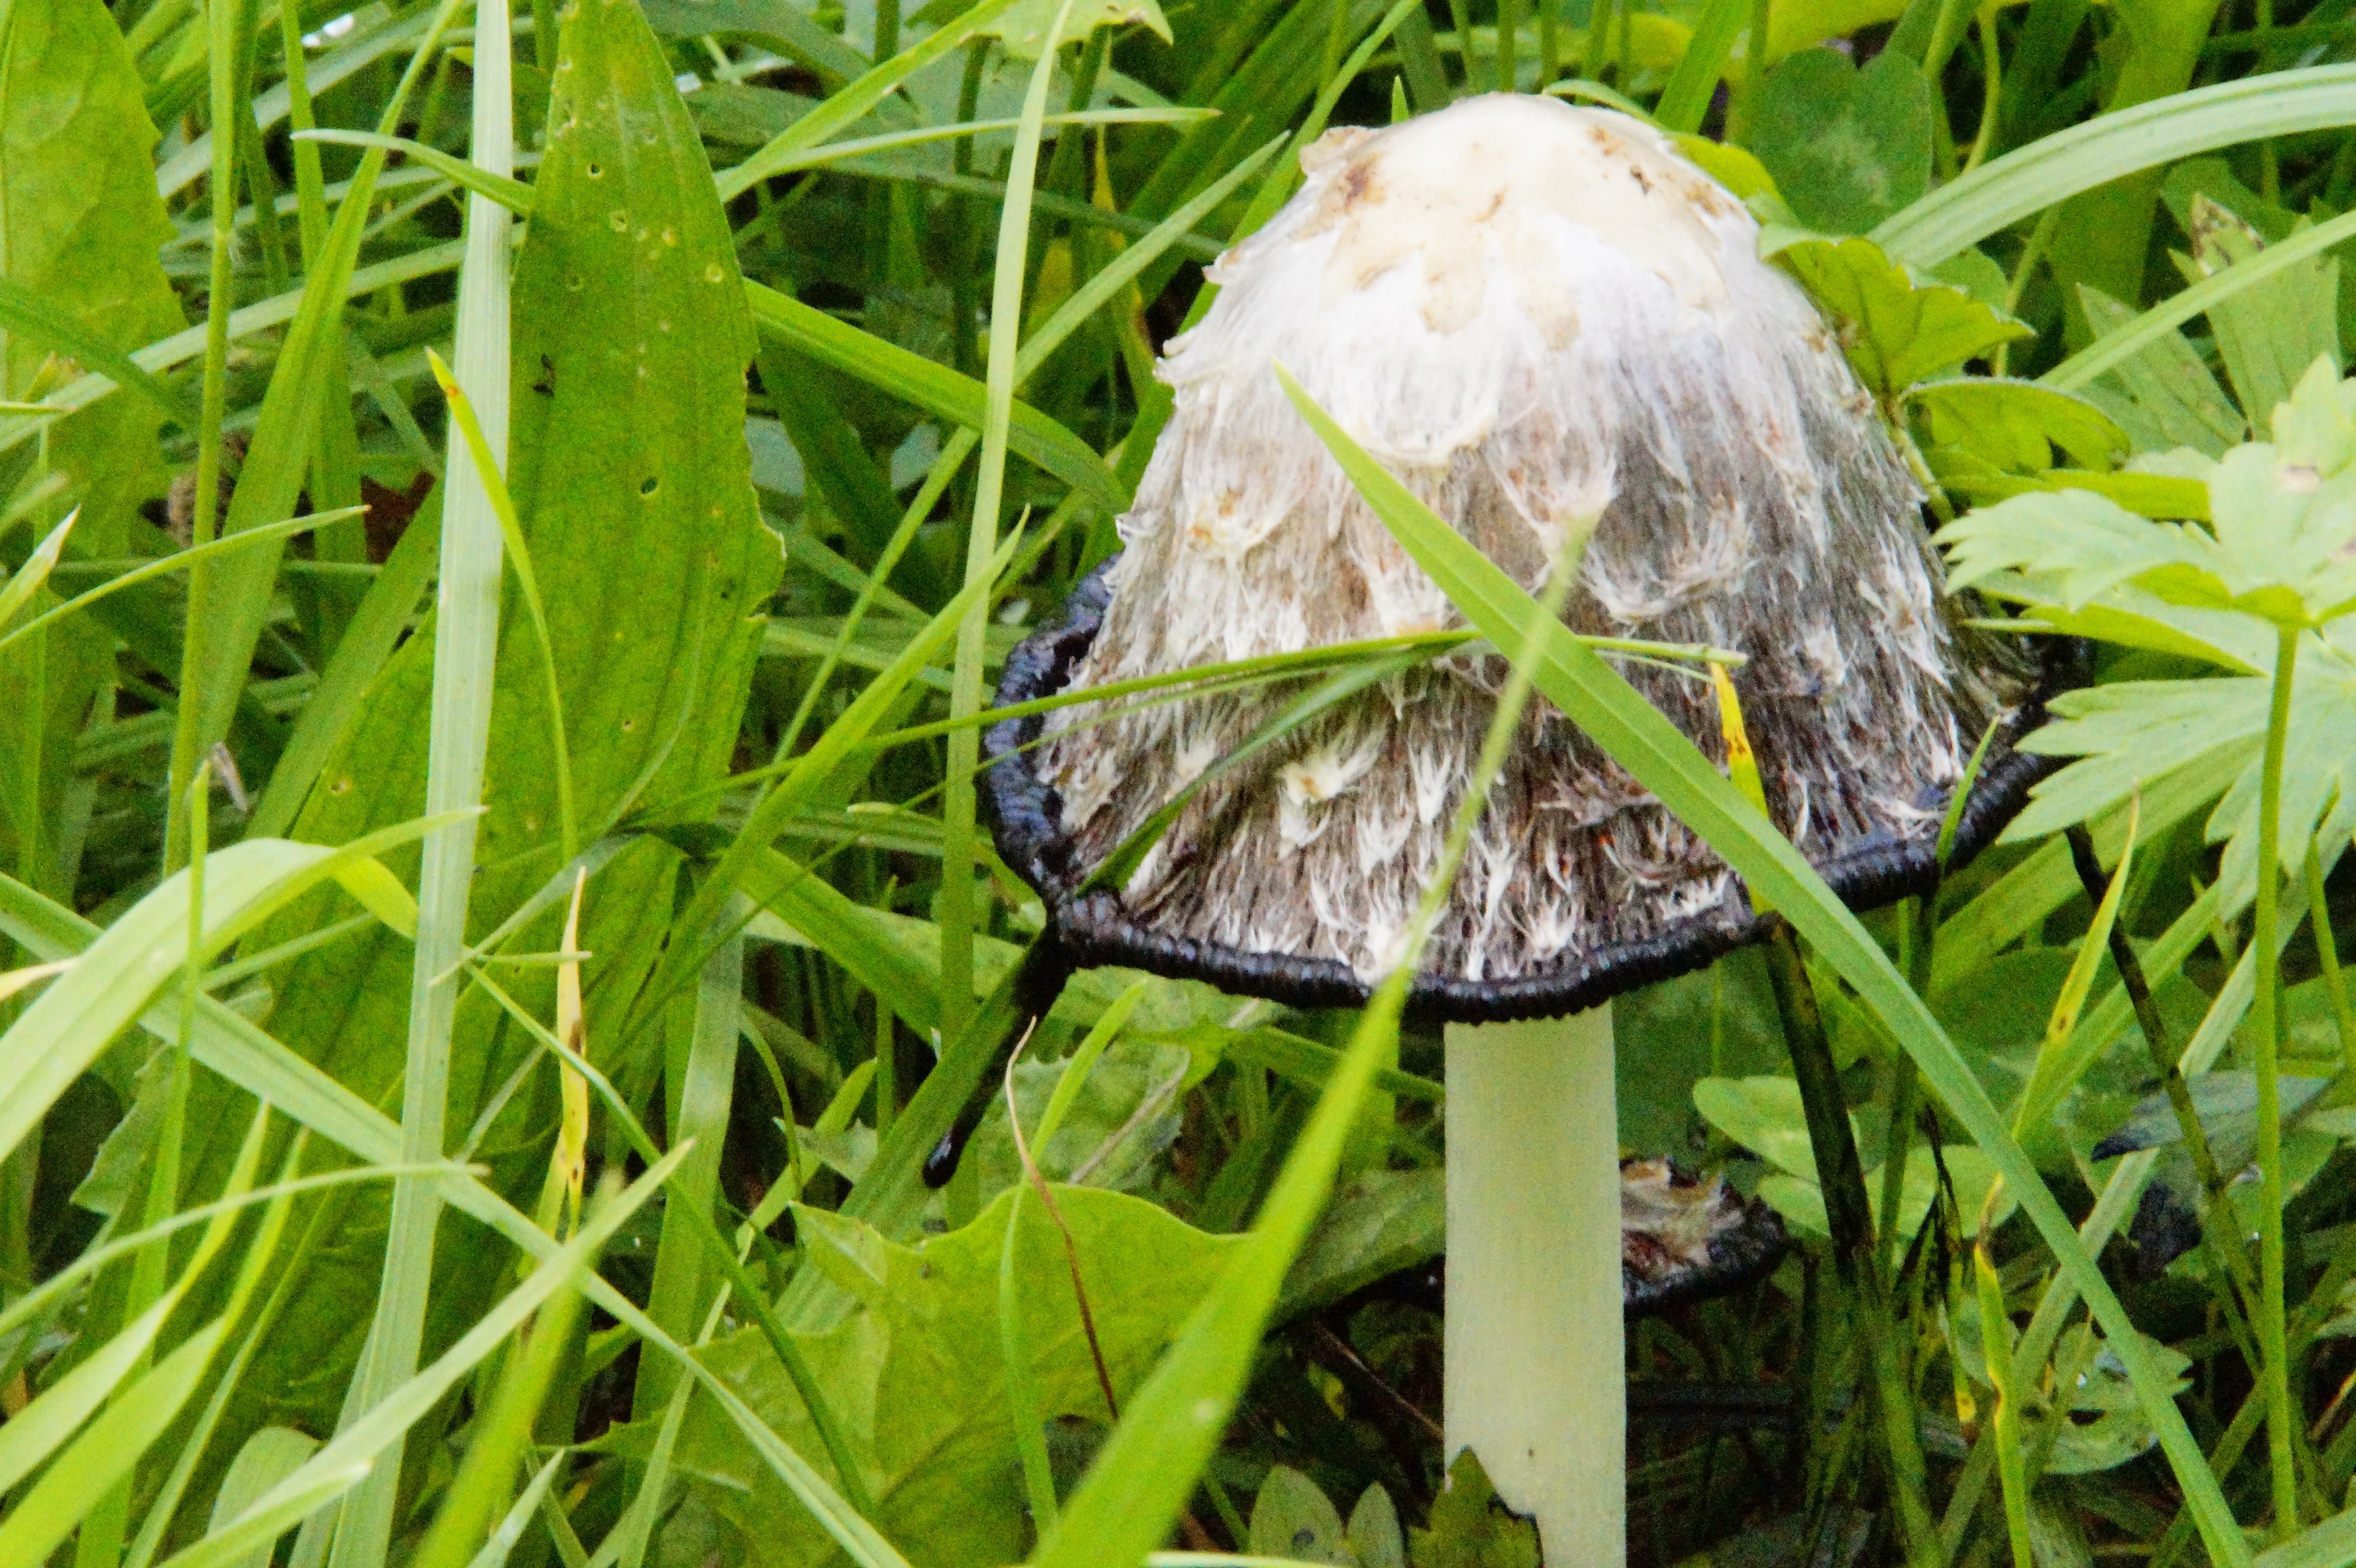 brown mushroom surround green grass